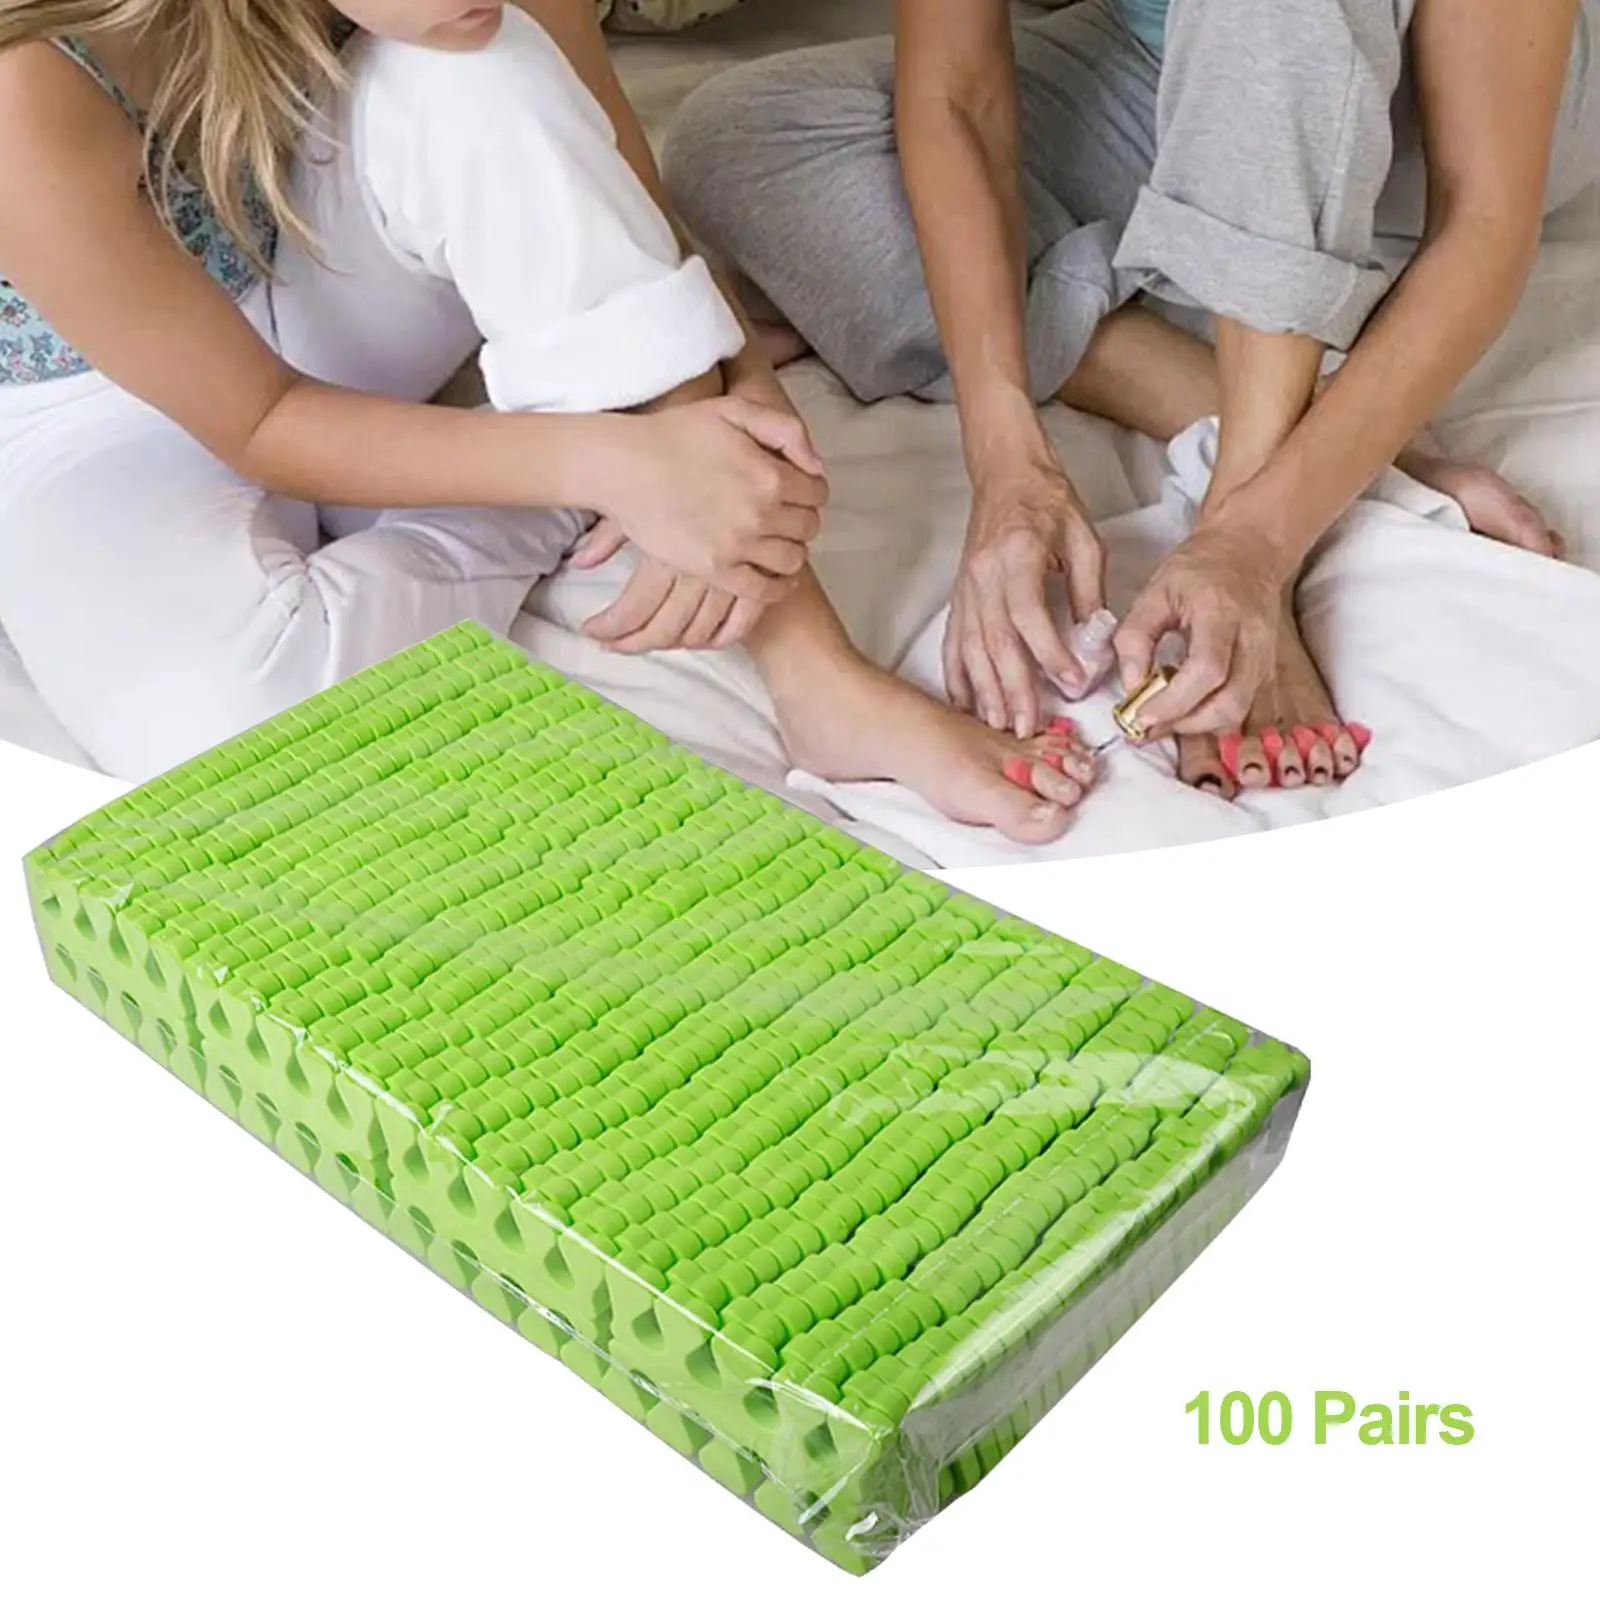 Toe Separator Soft Sponge Practical for Manicure Pedicure 200